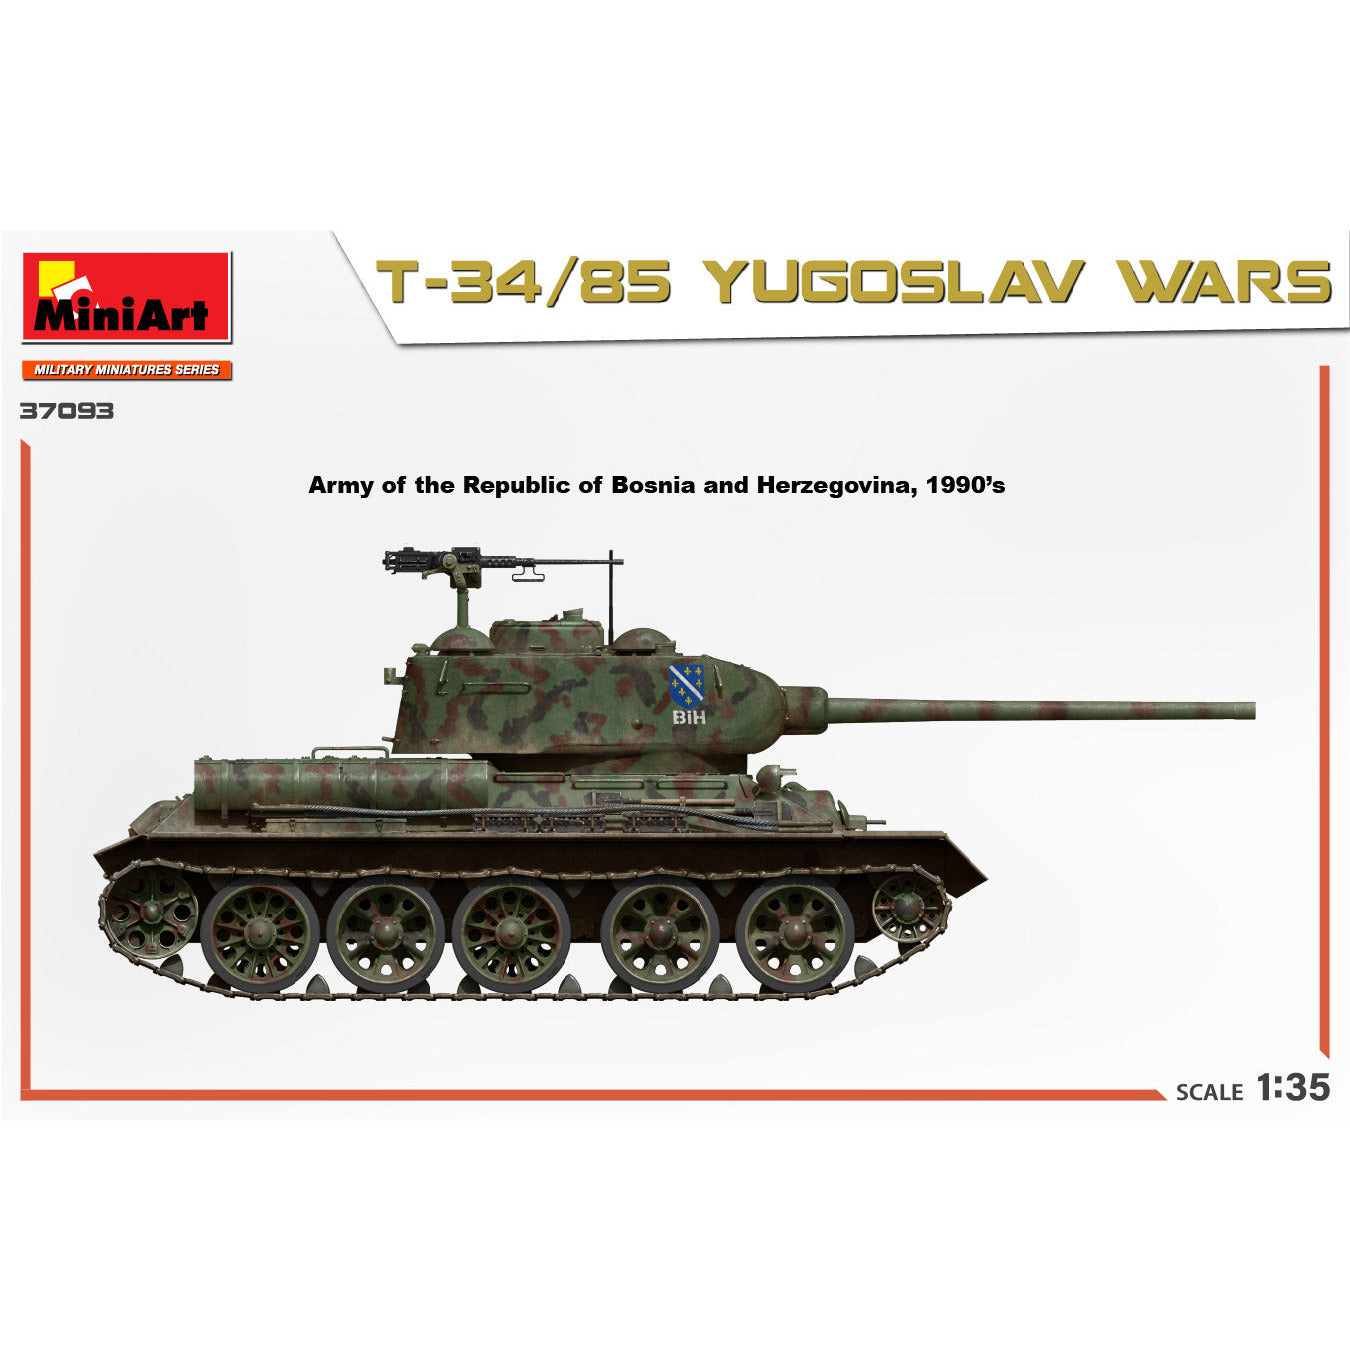 MINIART 1/35 T-34/85 Yugoslav Wars